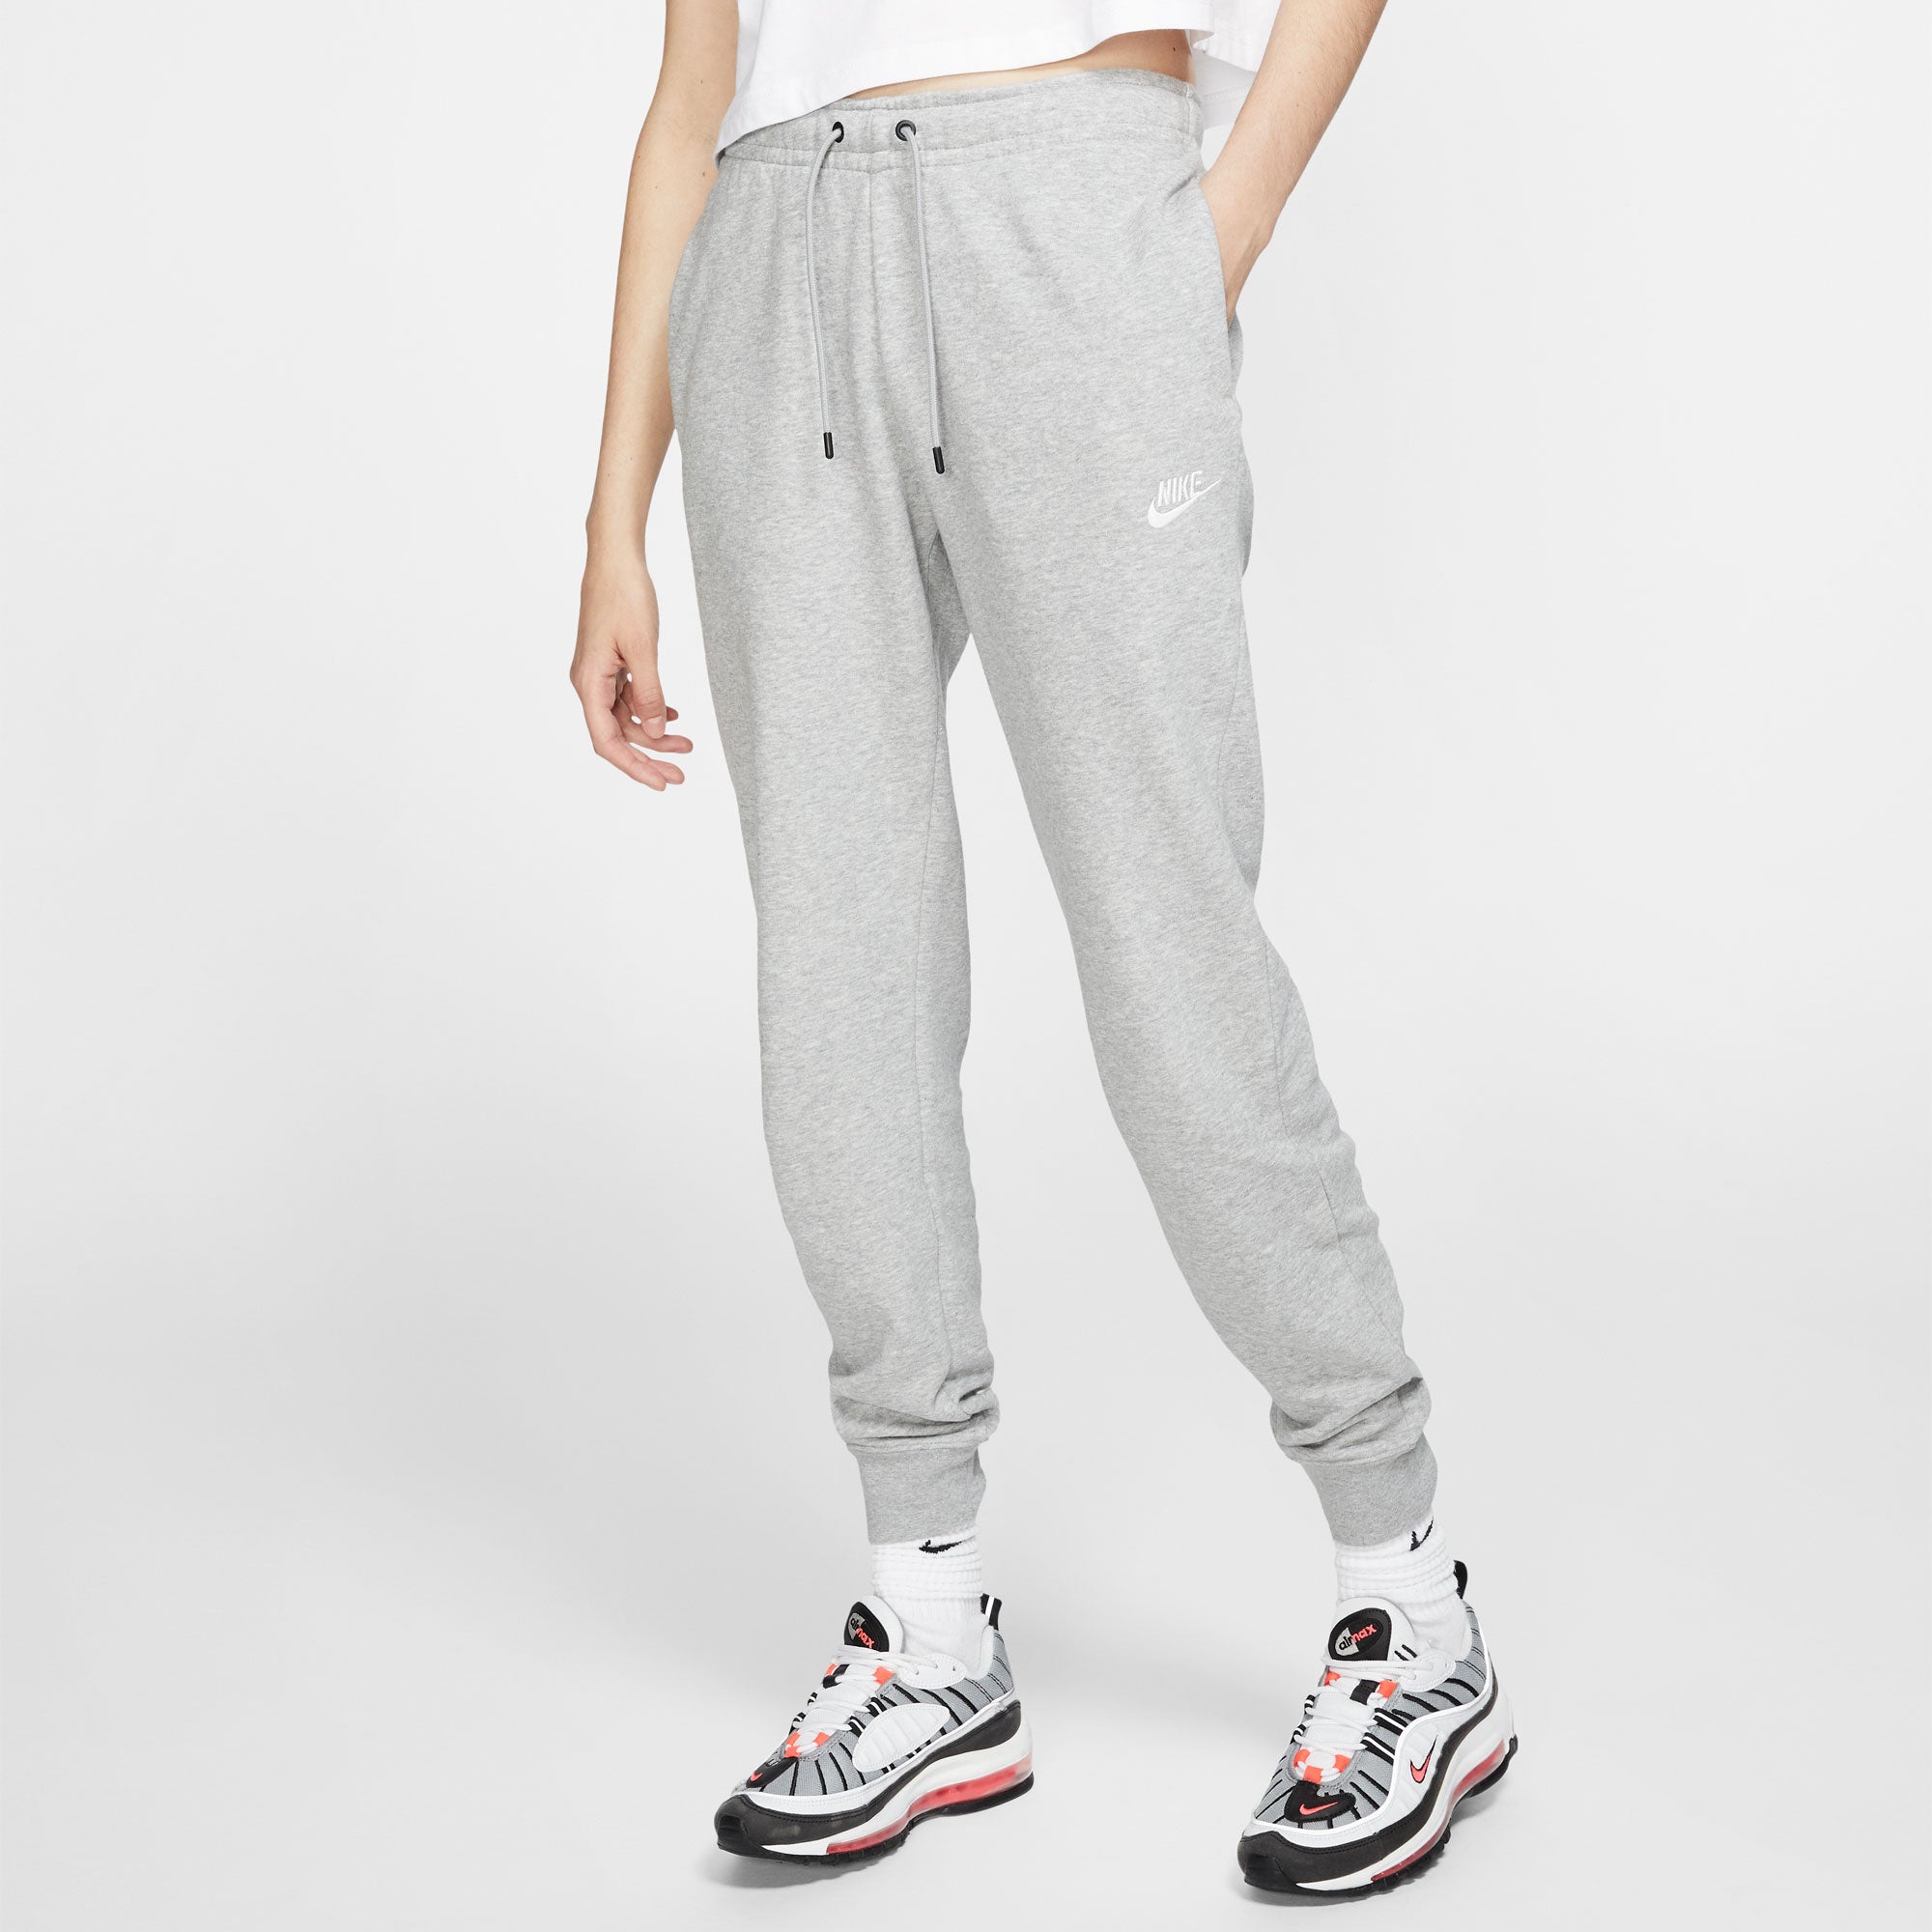 Nike Essential Women's Fleece Pants Grey (1)